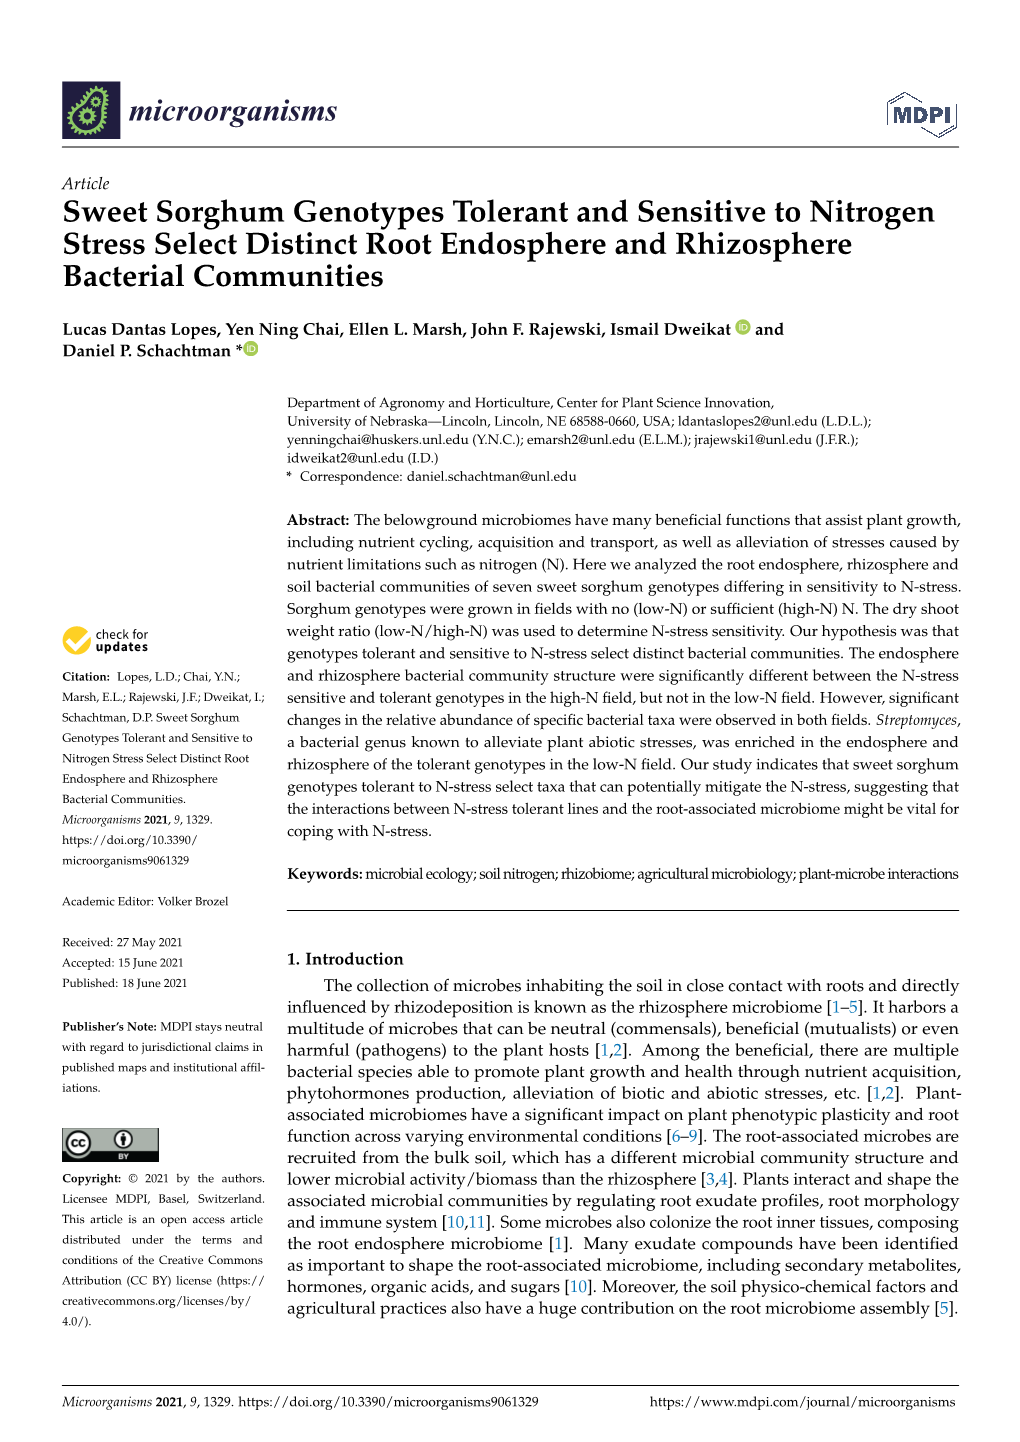 Sweet Sorghum Genotypes Tolerant and Sensitive to Nitrogen Stress Select Distinct Root Endosphere and Rhizosphere Bacterial Communities